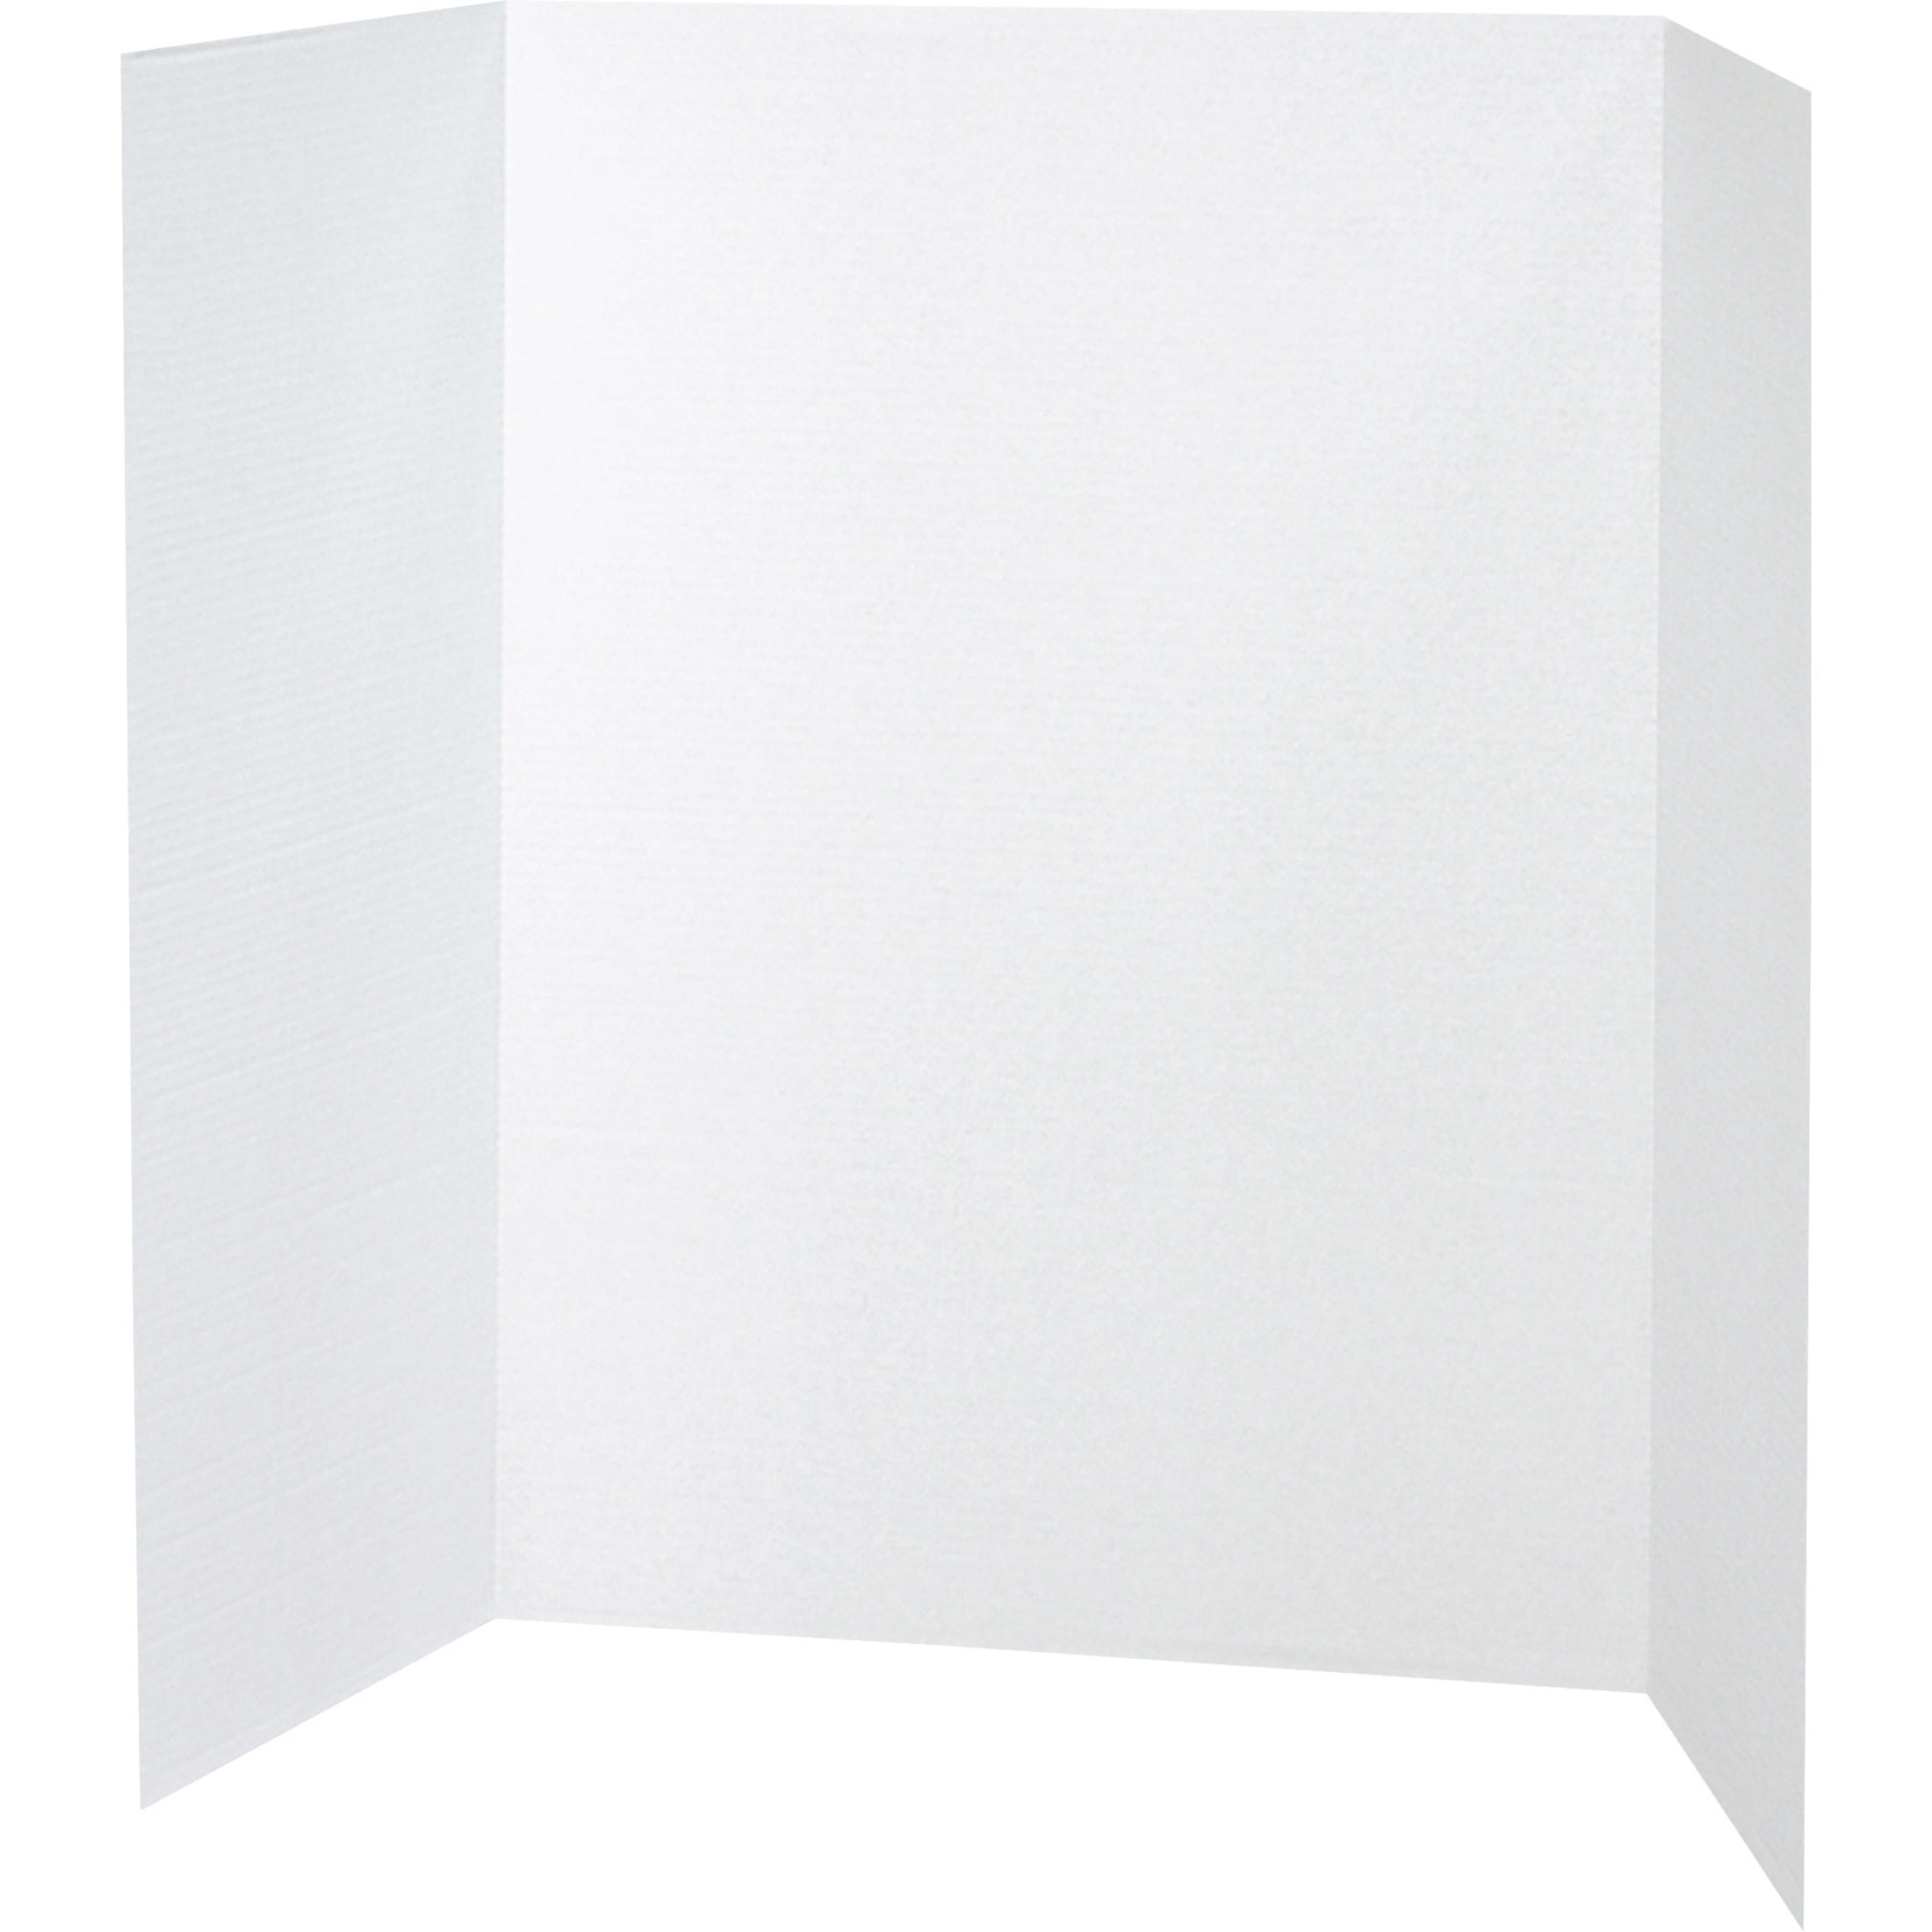  8 Pieces Tri Fold Poster Board,Lightweight Fold